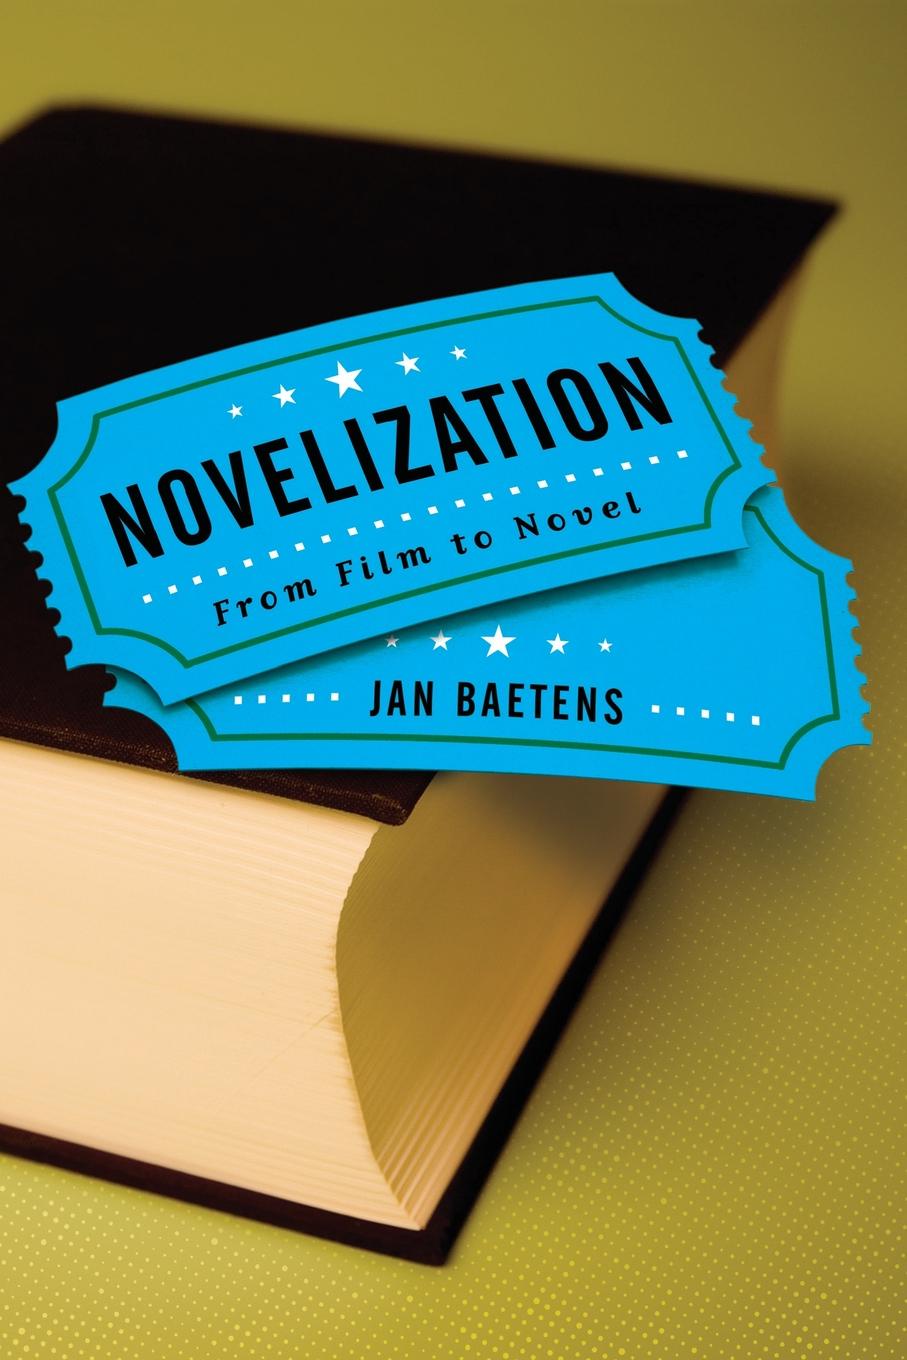 Novelization. From Film to Novel